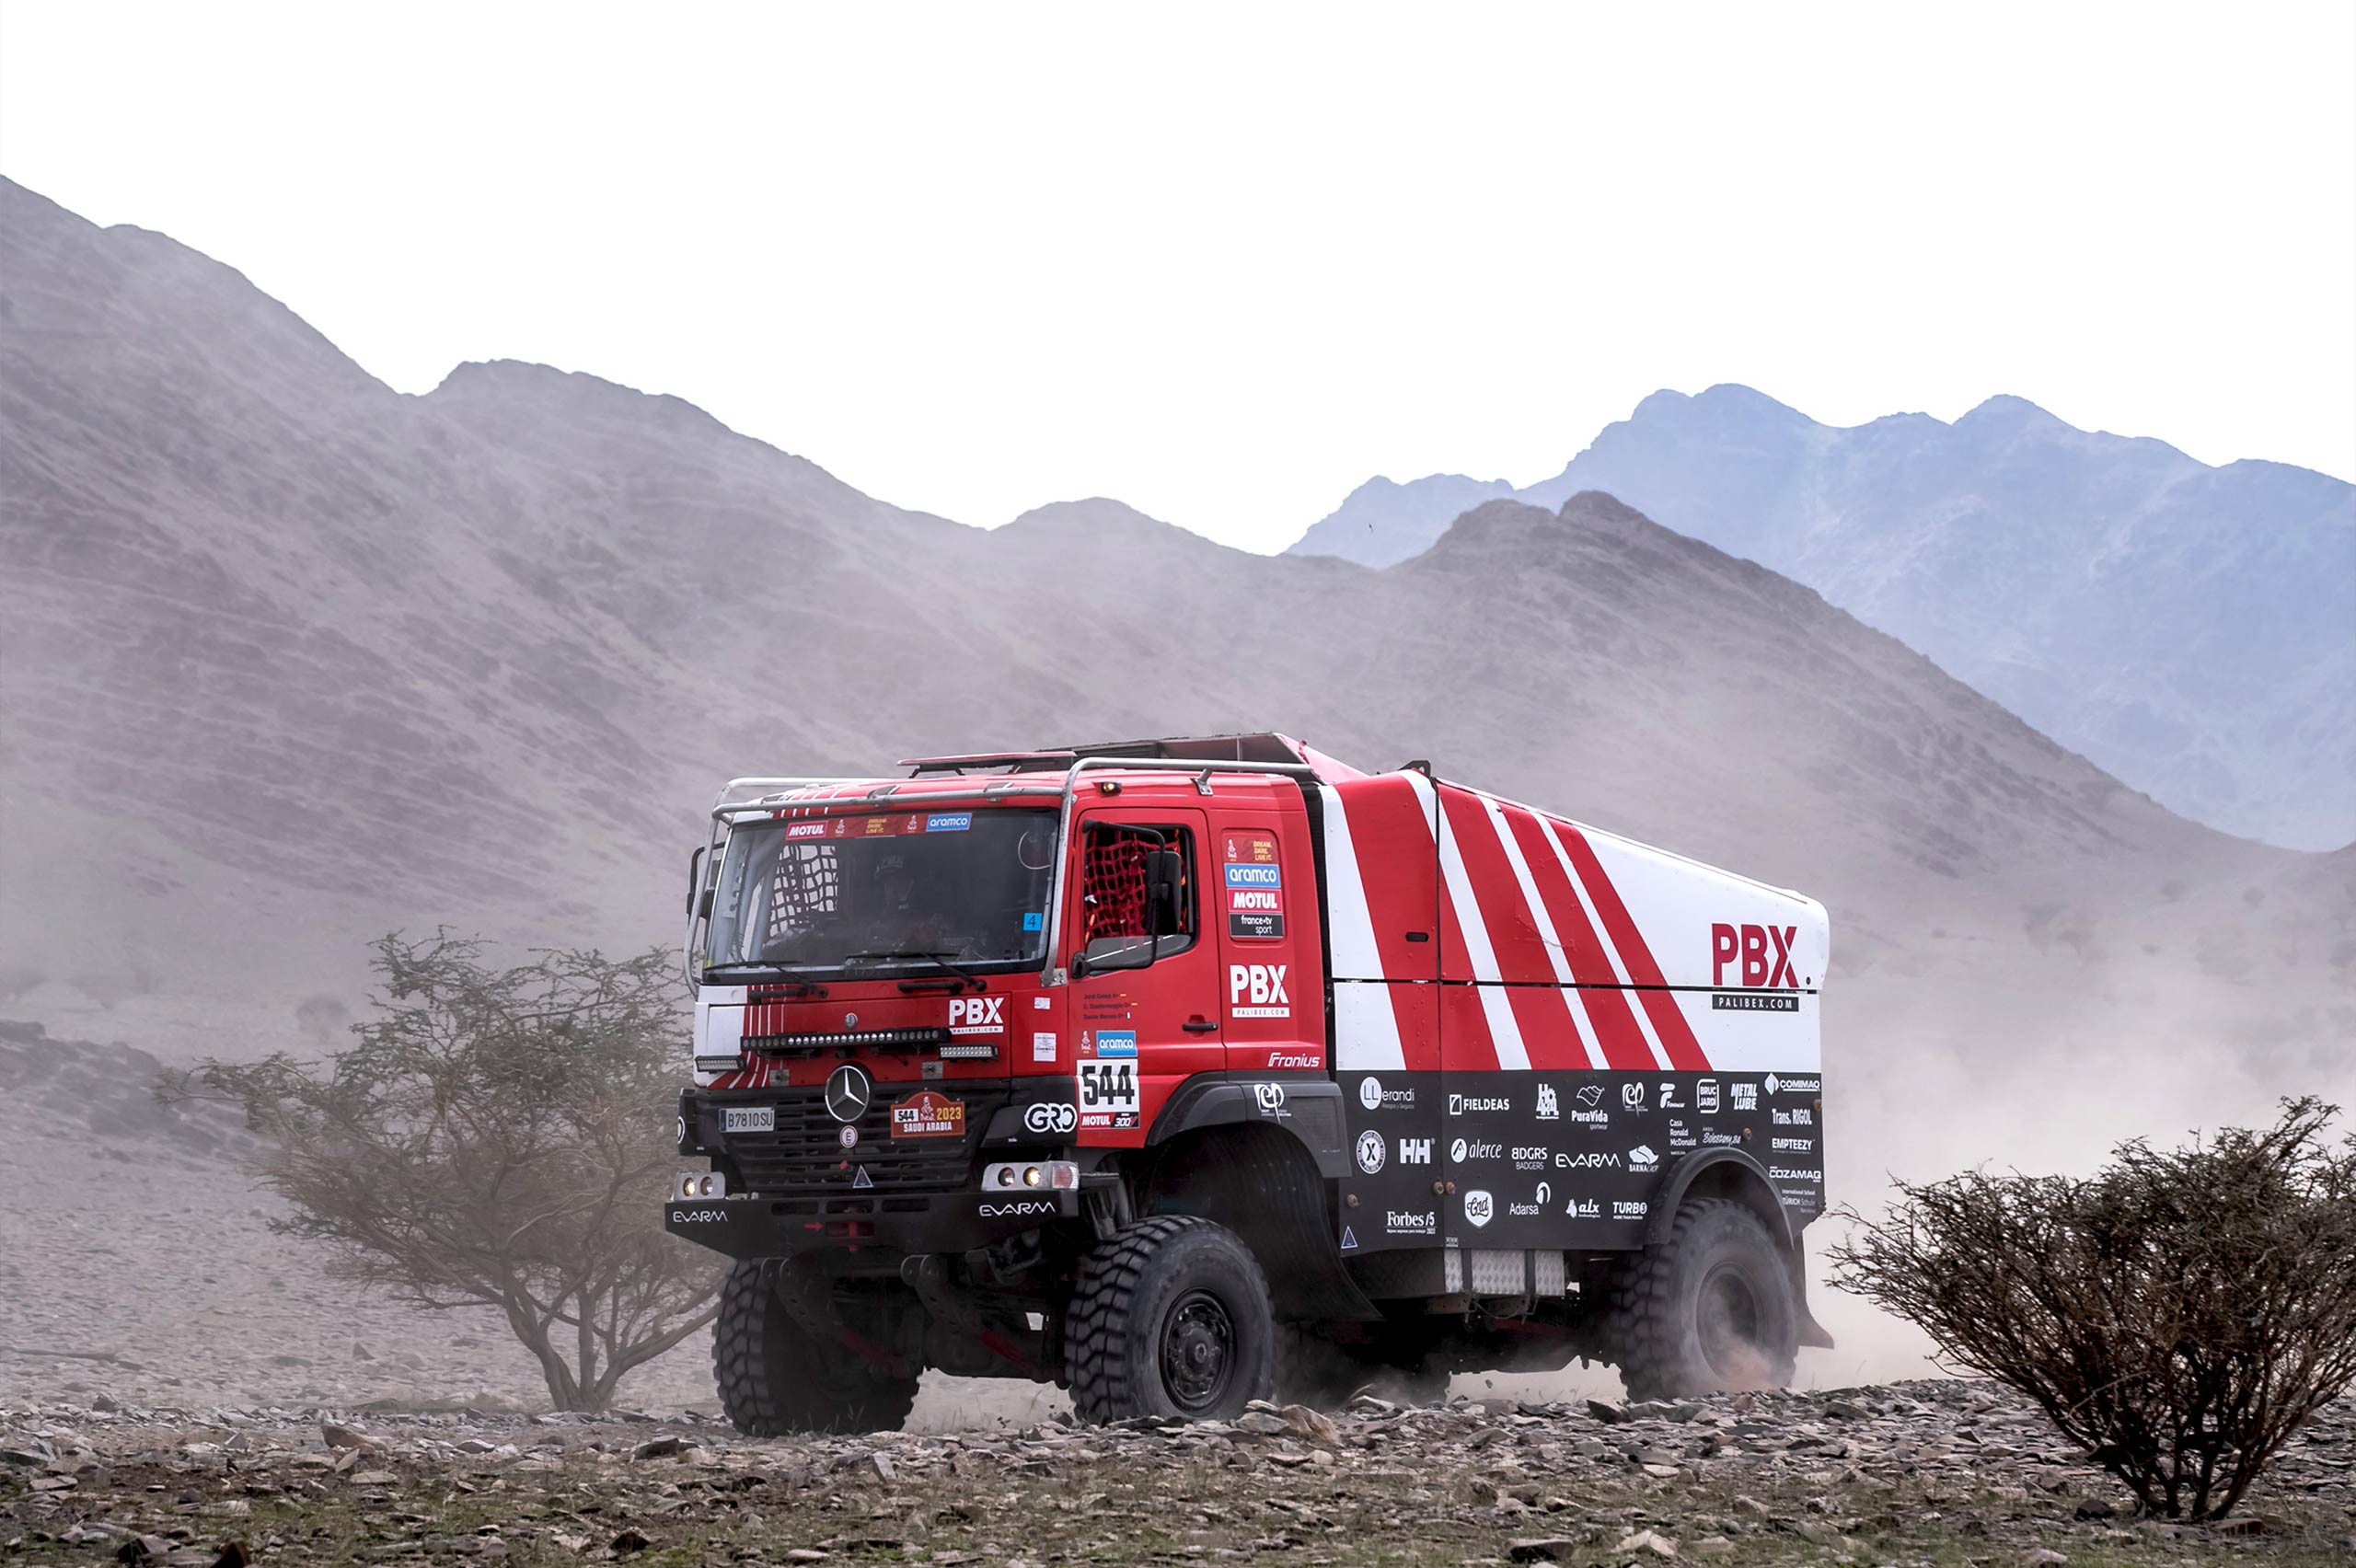 competicion todoterreno - camion dakar - camion dunas desierto - pbx dakar team - palibex